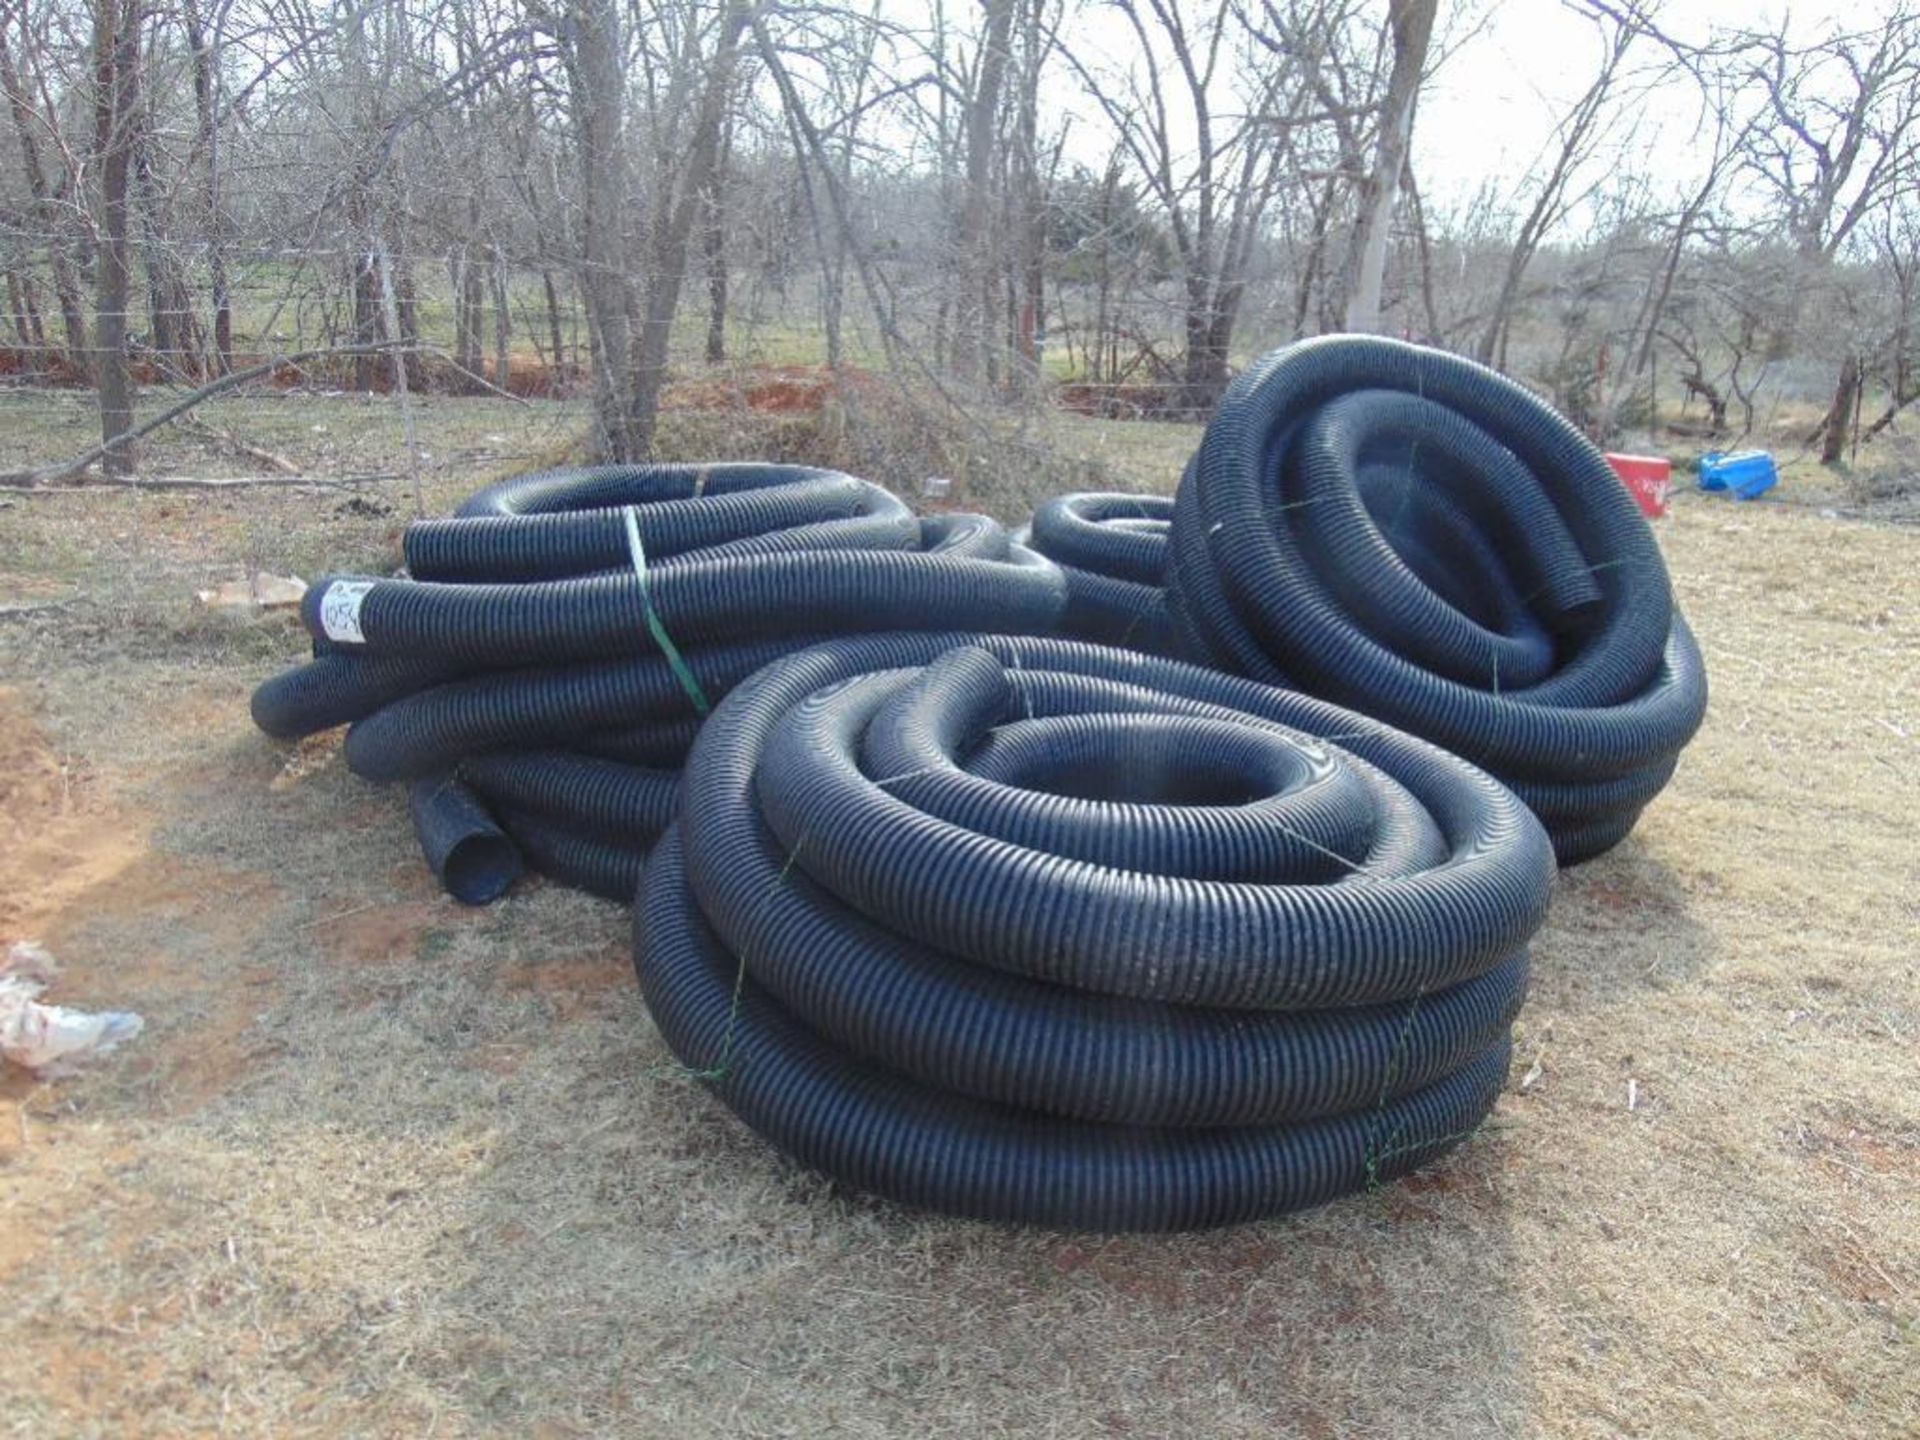 (4) Rolls of black plastic hose